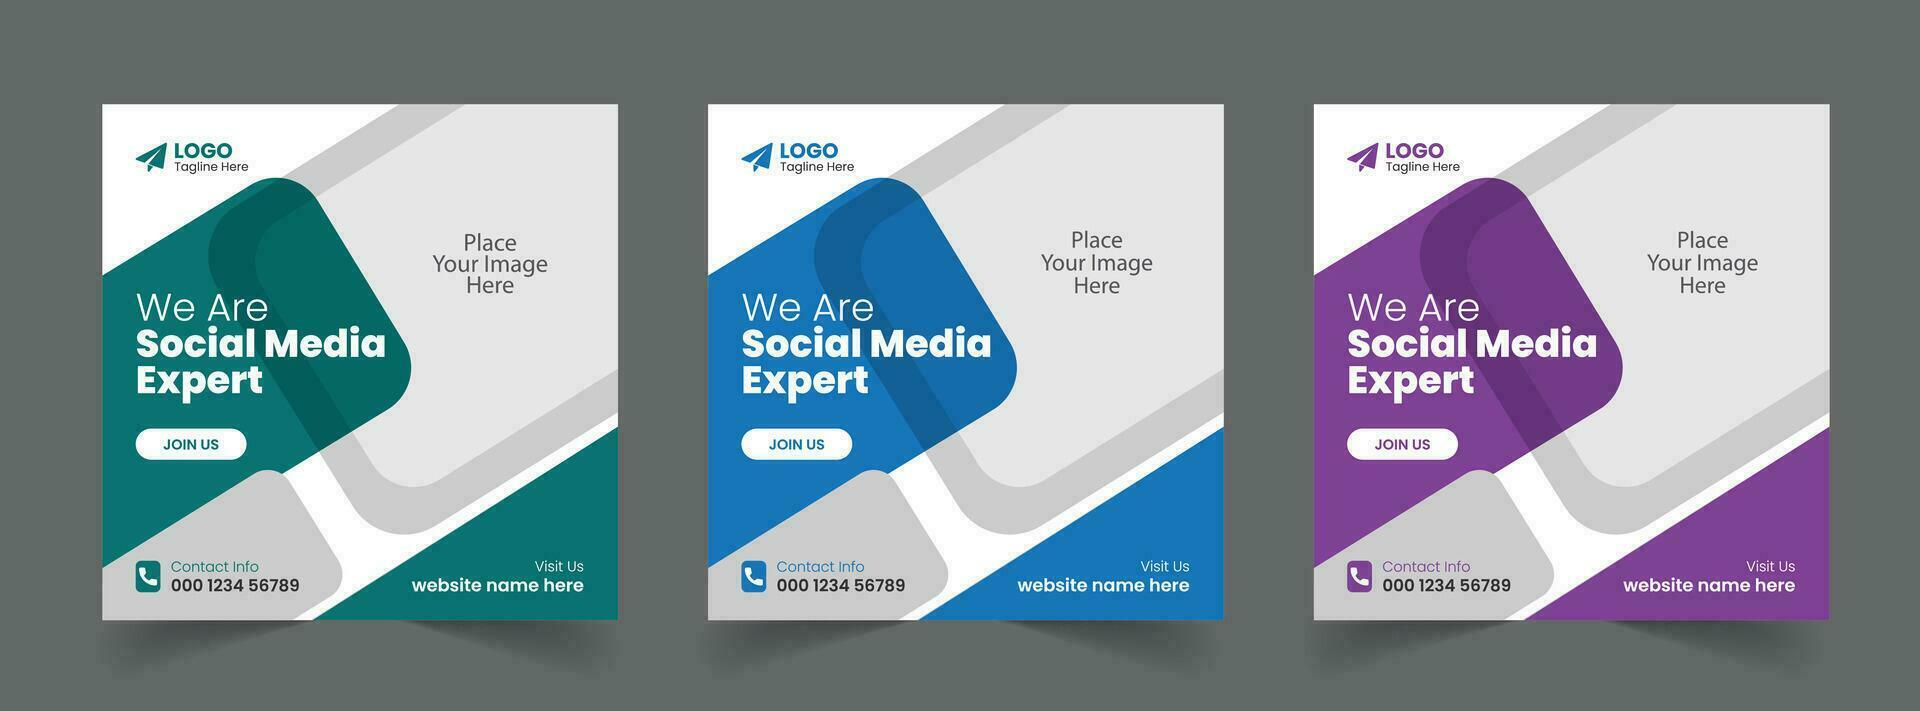 gratis vector corporativo negocio promoción digital agencia social medios de comunicación enviar modelo web bandera diseño